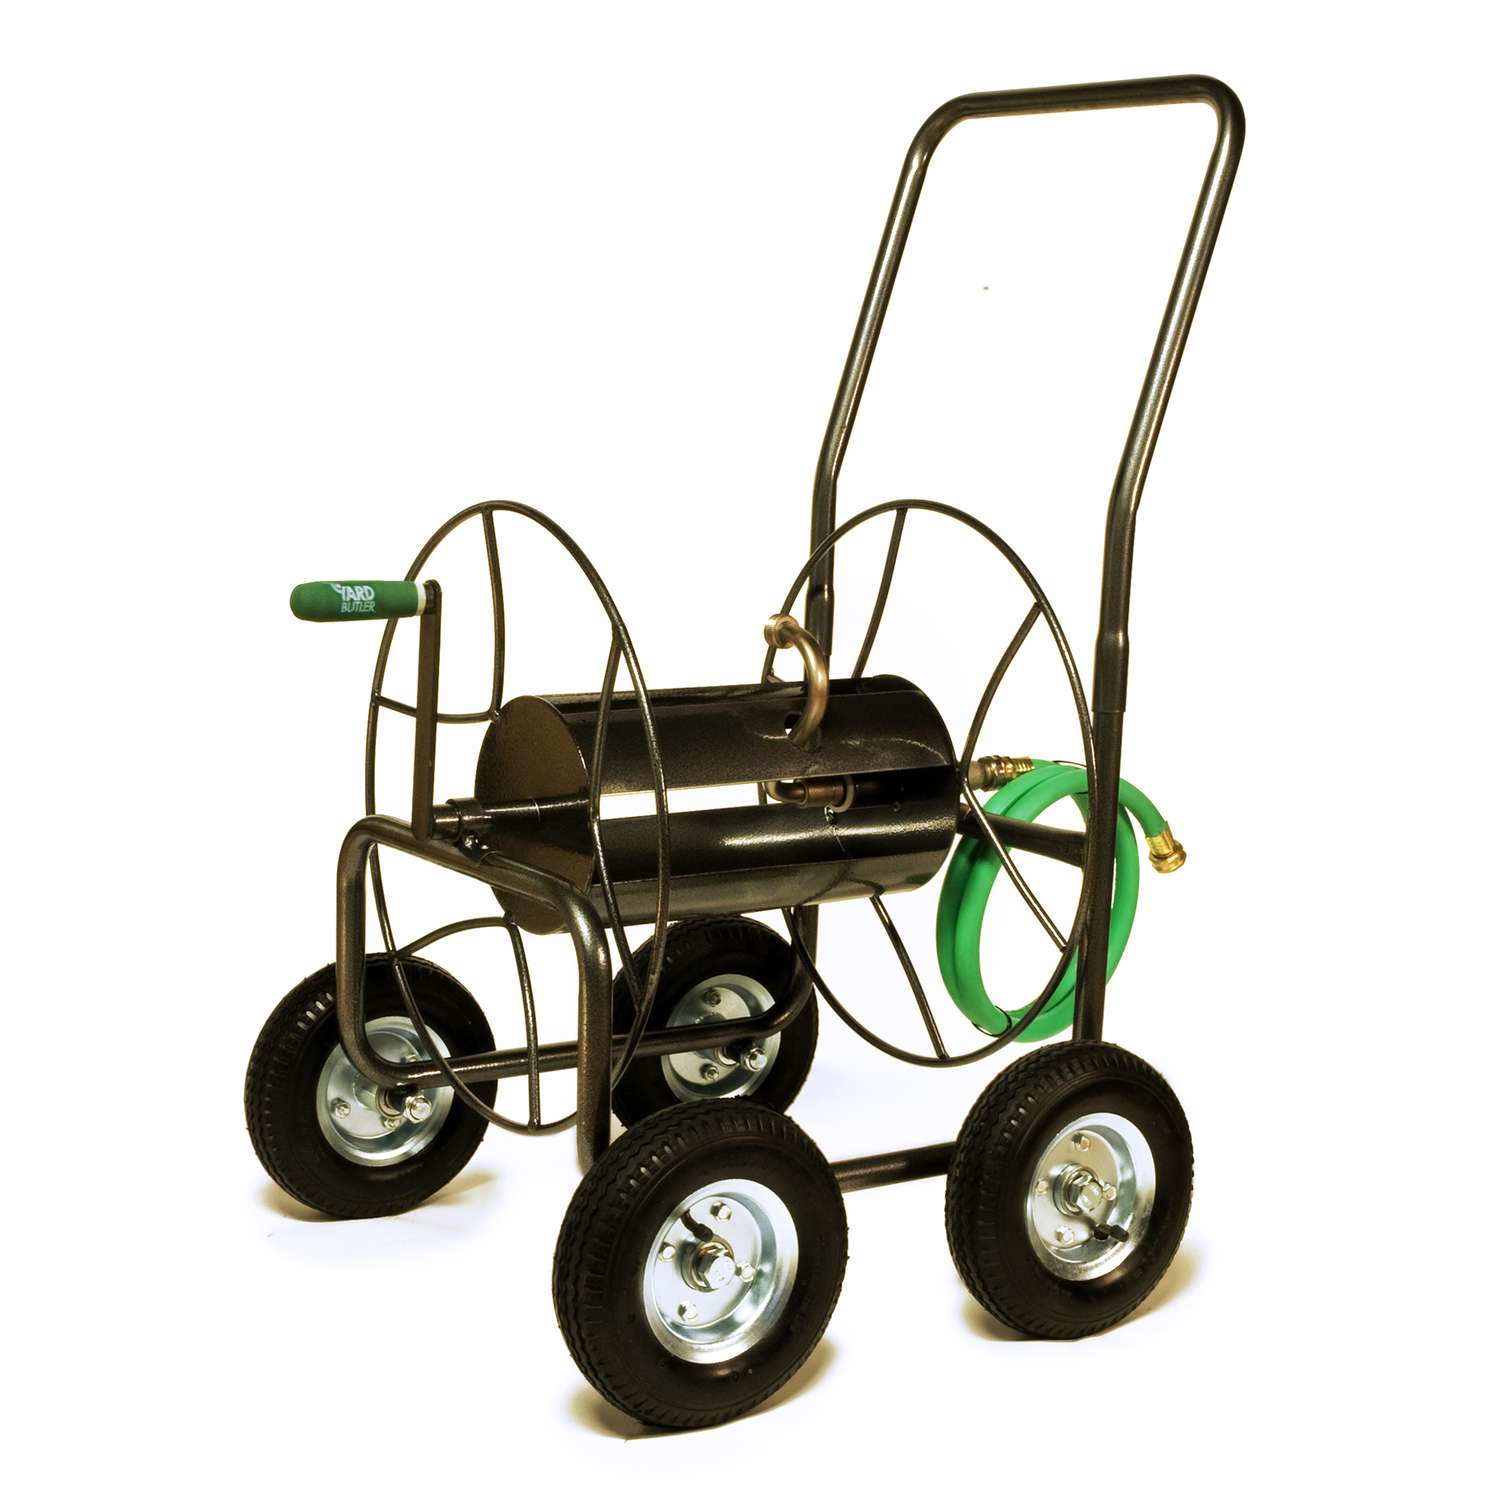 Yard Butler 400 ft. Silver Wheeled Hose Reel Cart - Ace Hardware